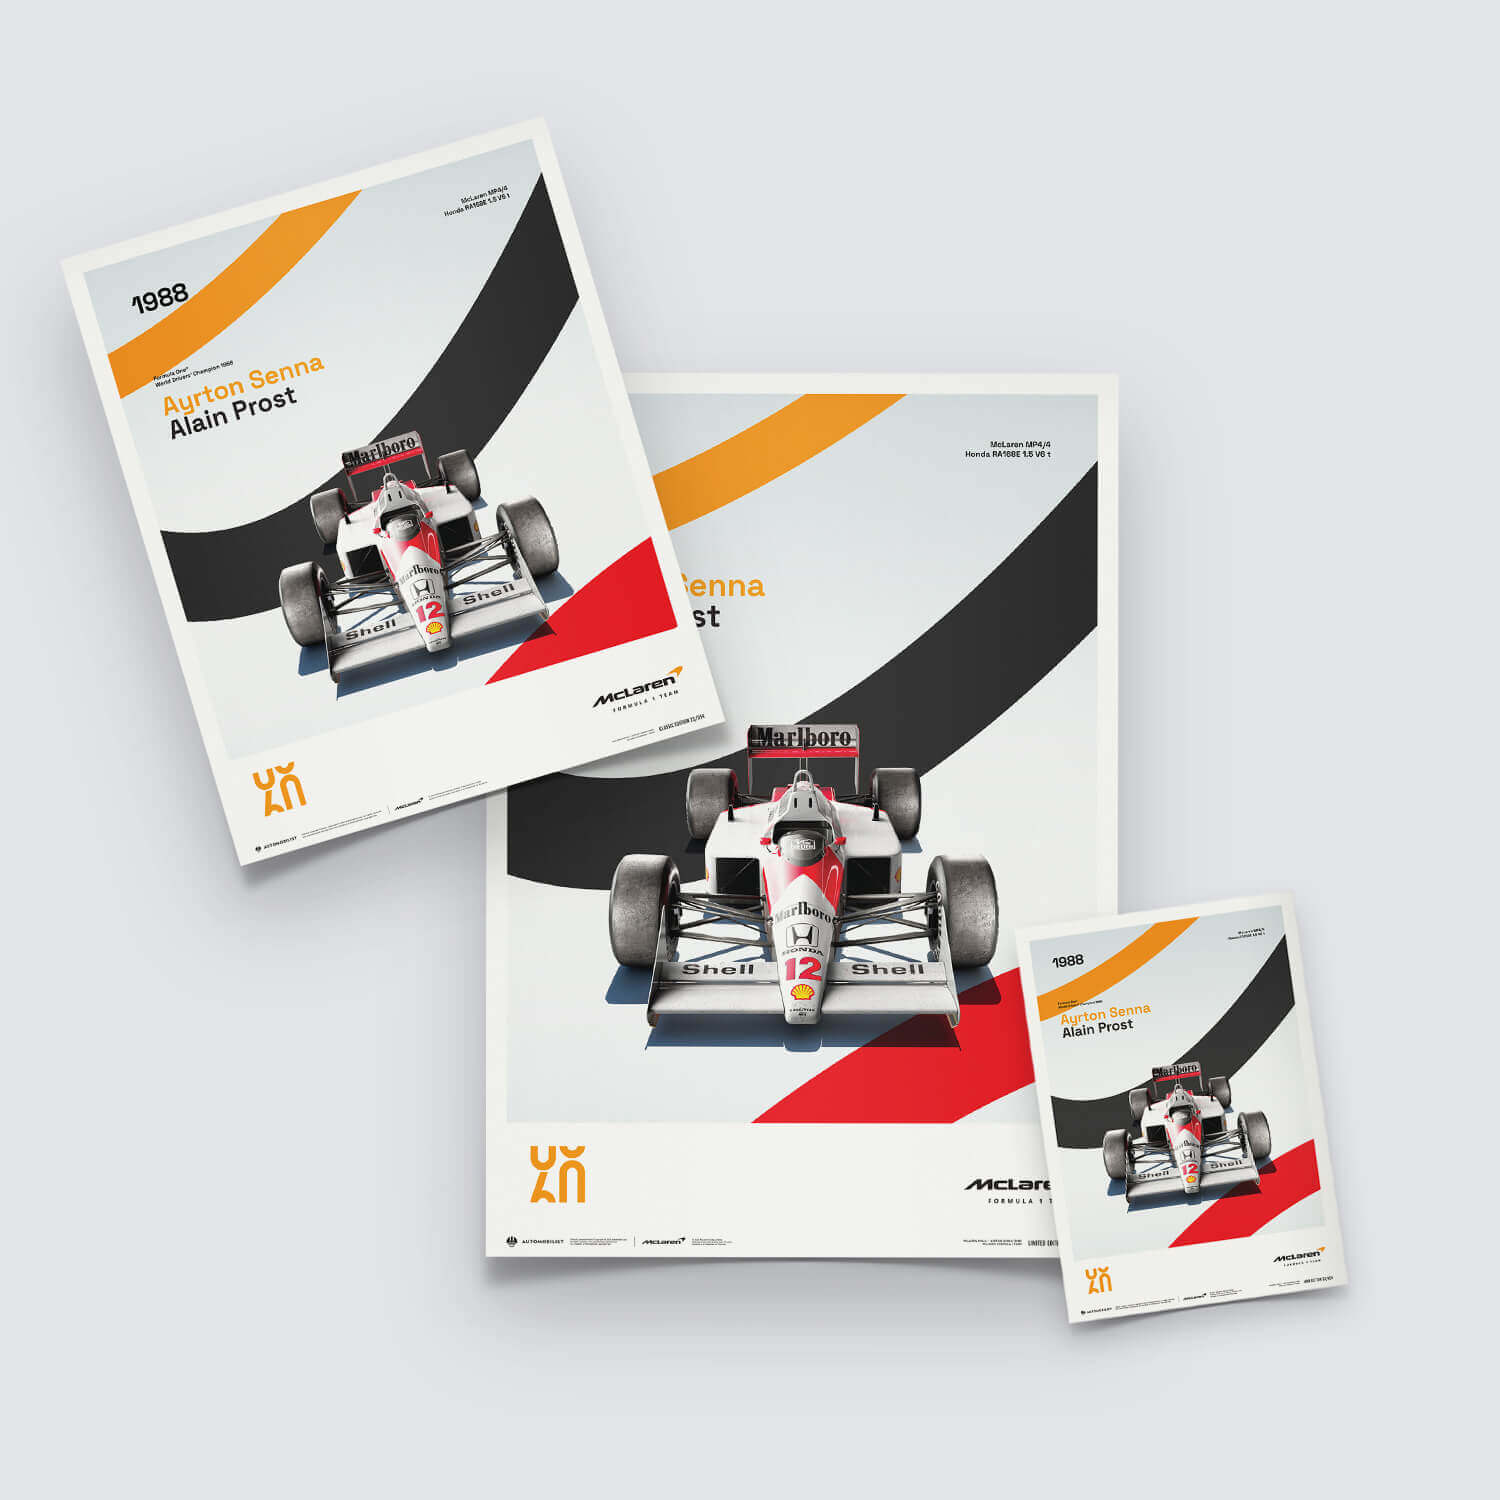 McLaren Racing - MP4/4 - 60th Anniversary - 1988